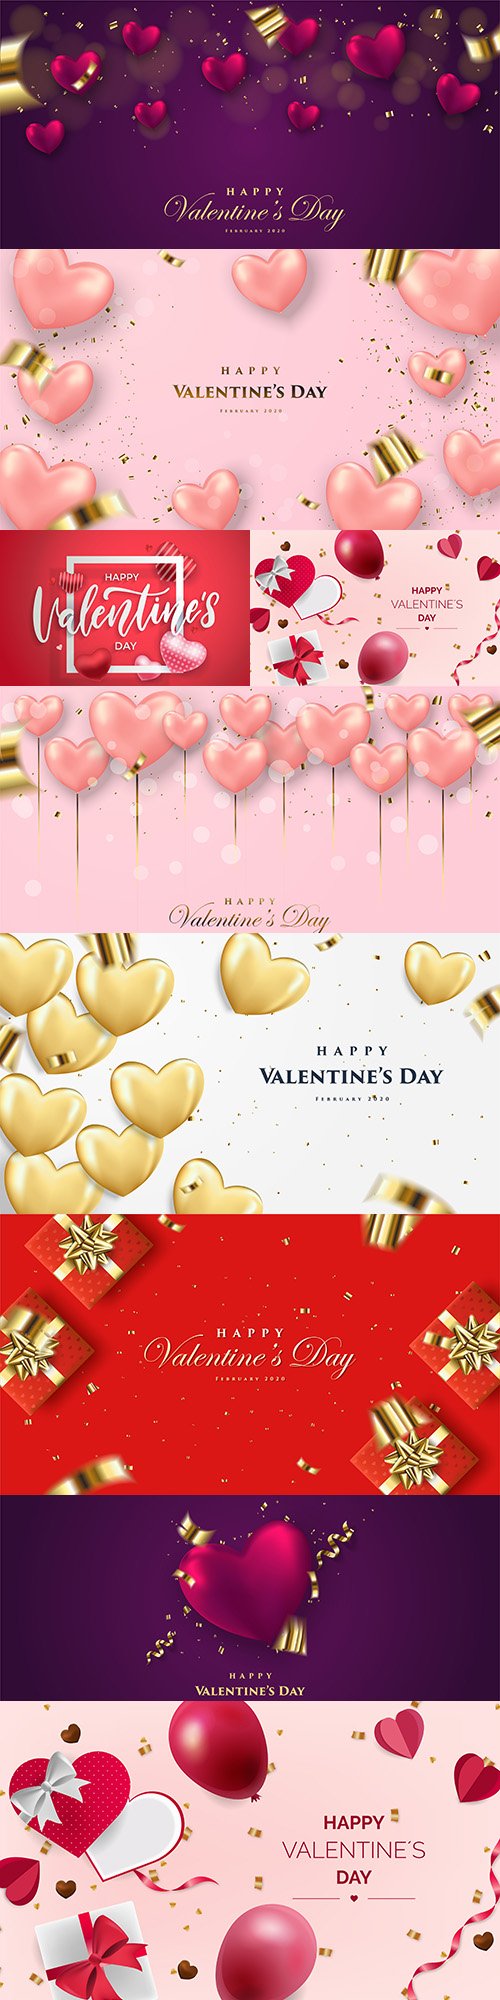 Valentine's Day romantic elements decorative illustrations 8